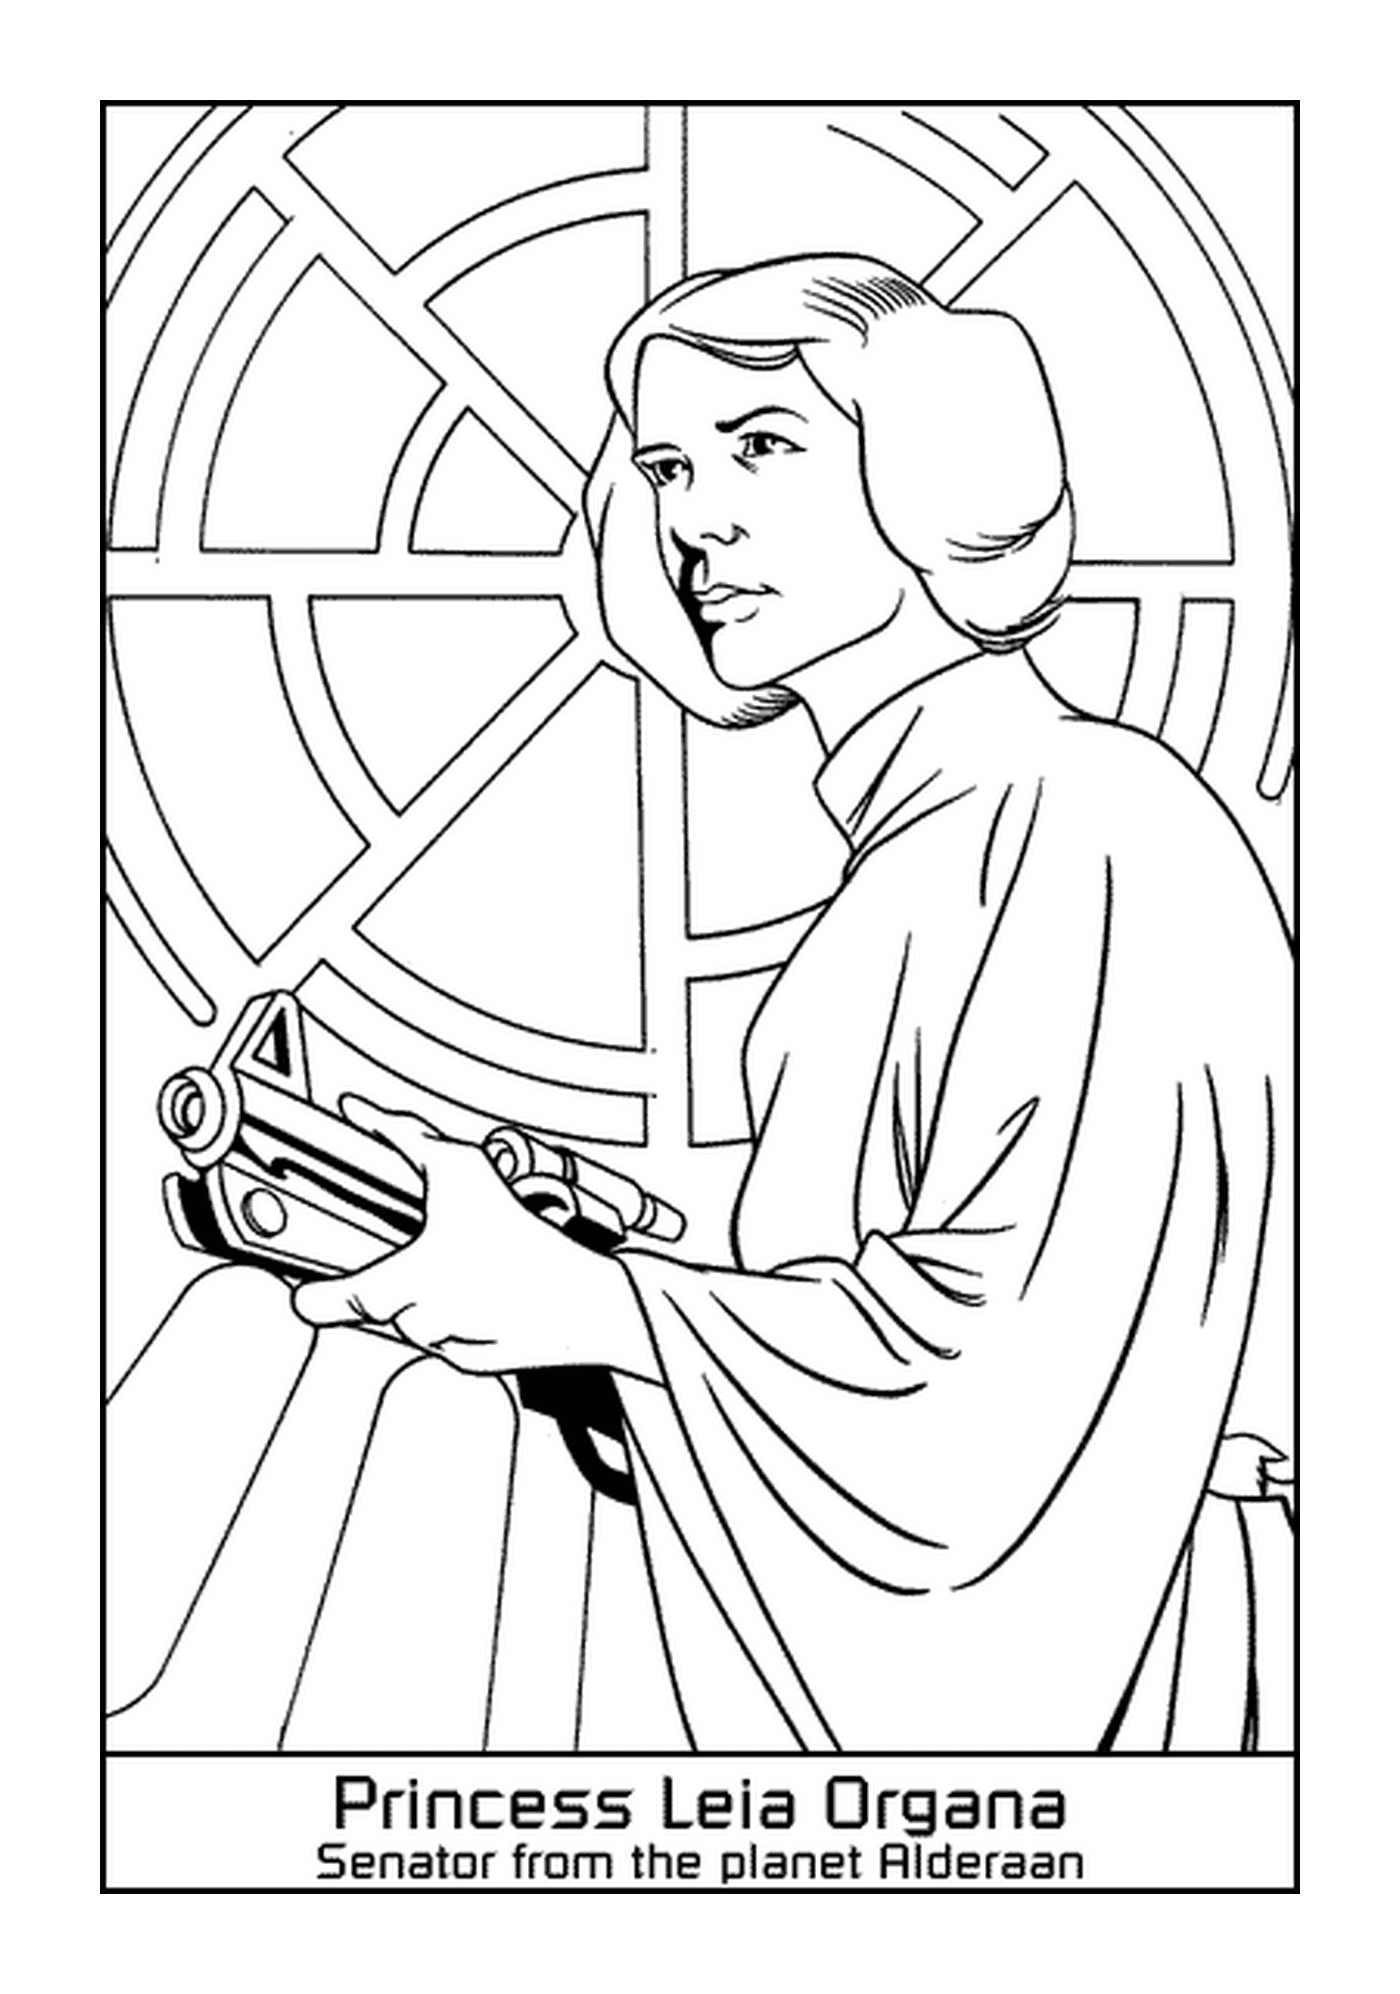  Princesa Leia Organa, valiente 